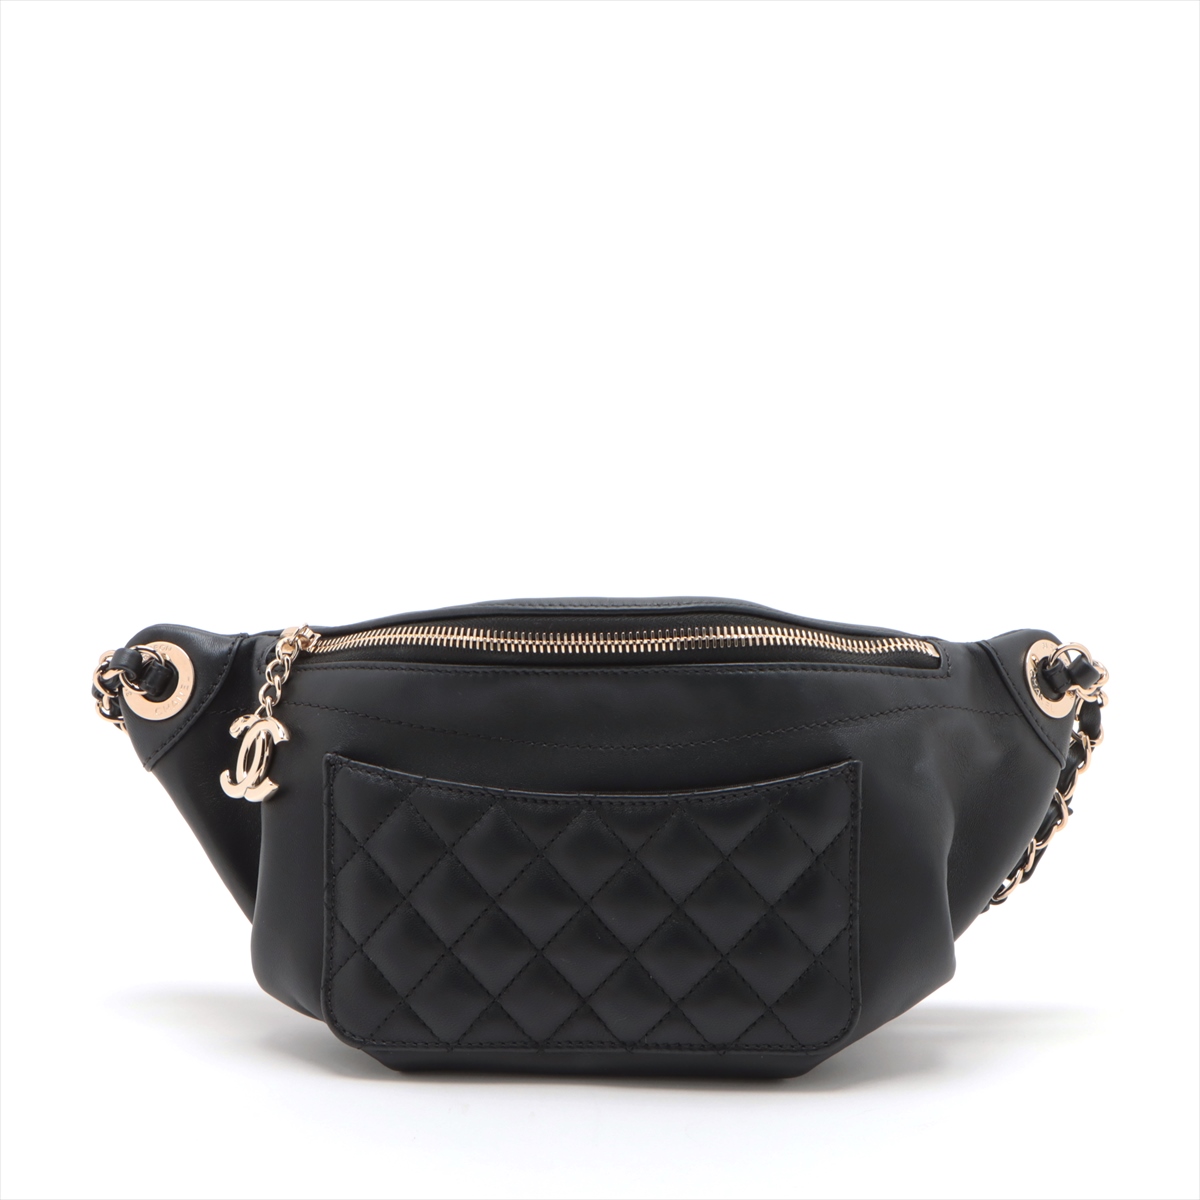  Chanel matelasse овчина сумка "body" черный Gold металлические принадлежности 28 номер шт. 